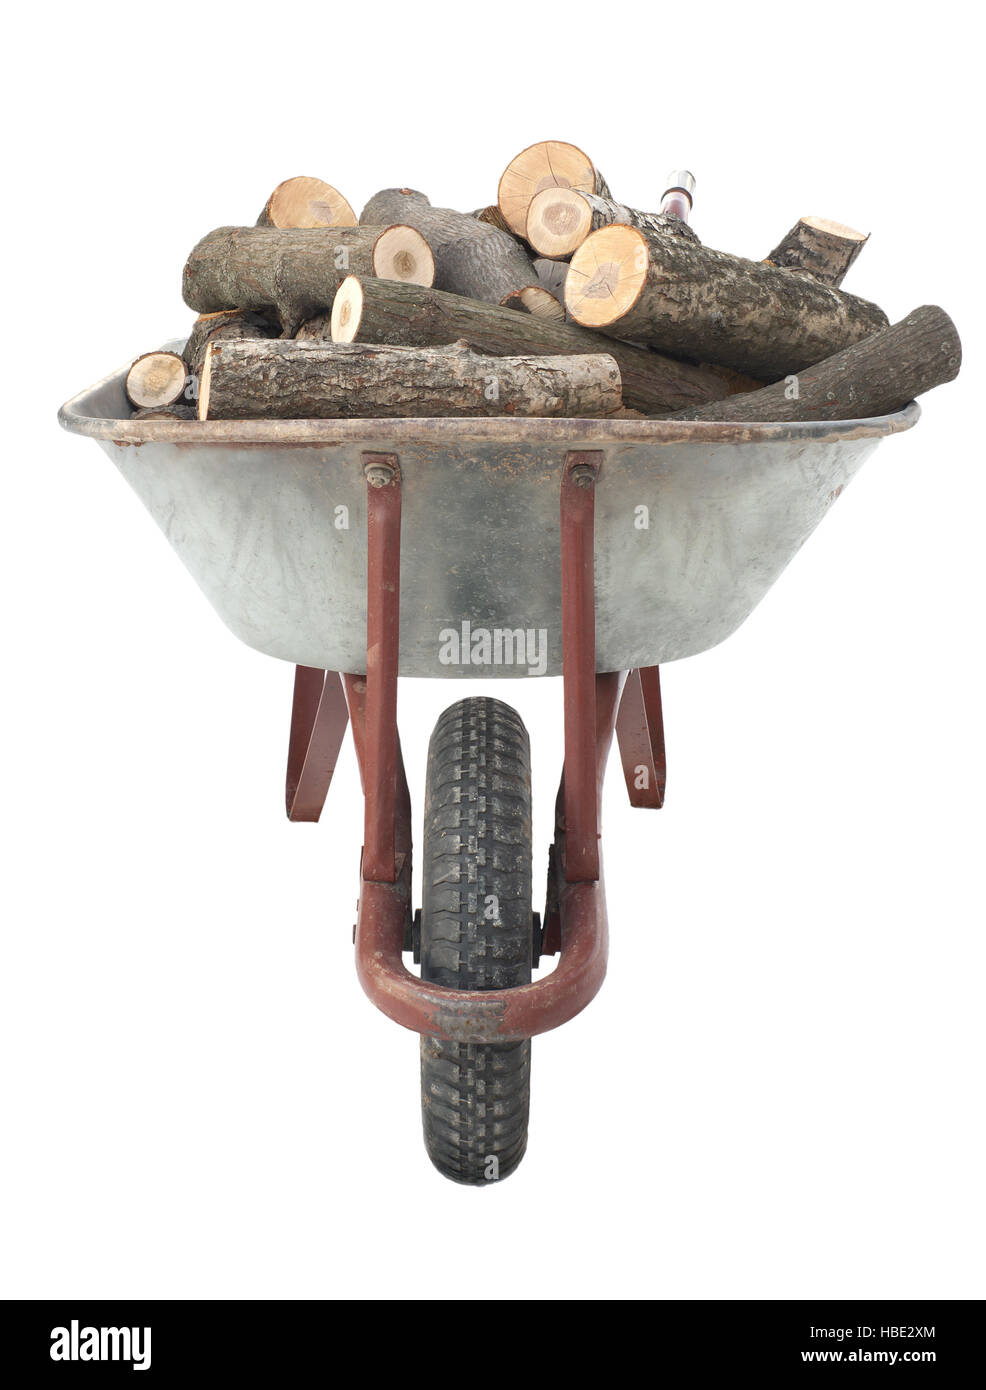 Firewood in old wheelbarrow Stock Photo